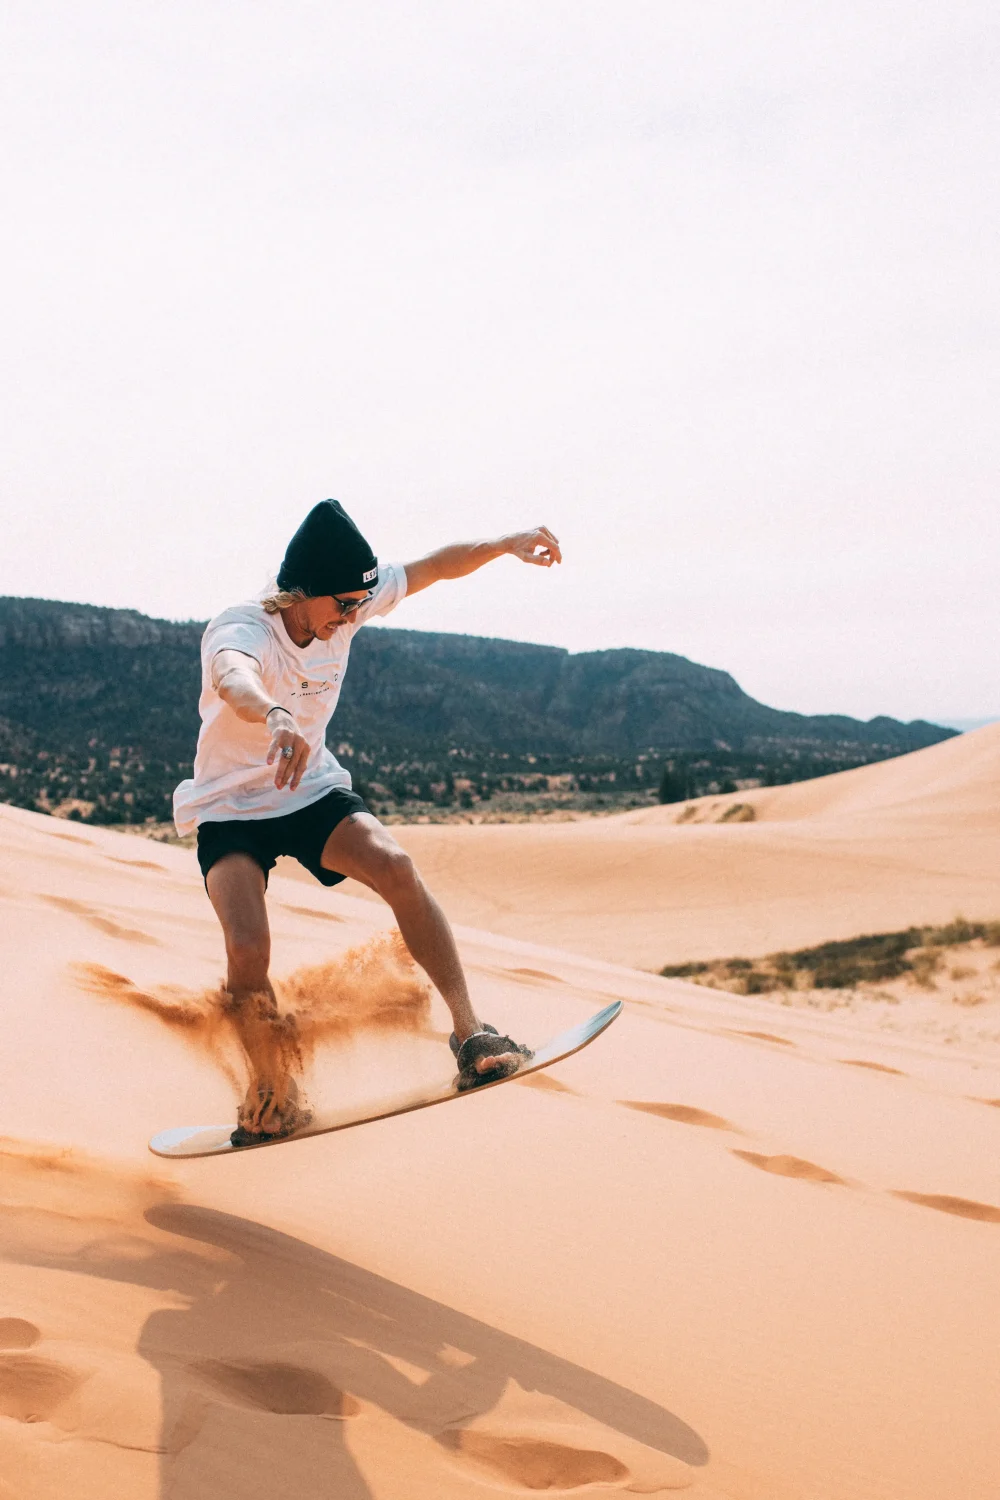 Sandboarding in Agadir (Surf In Sand) - Marocknroll Tours